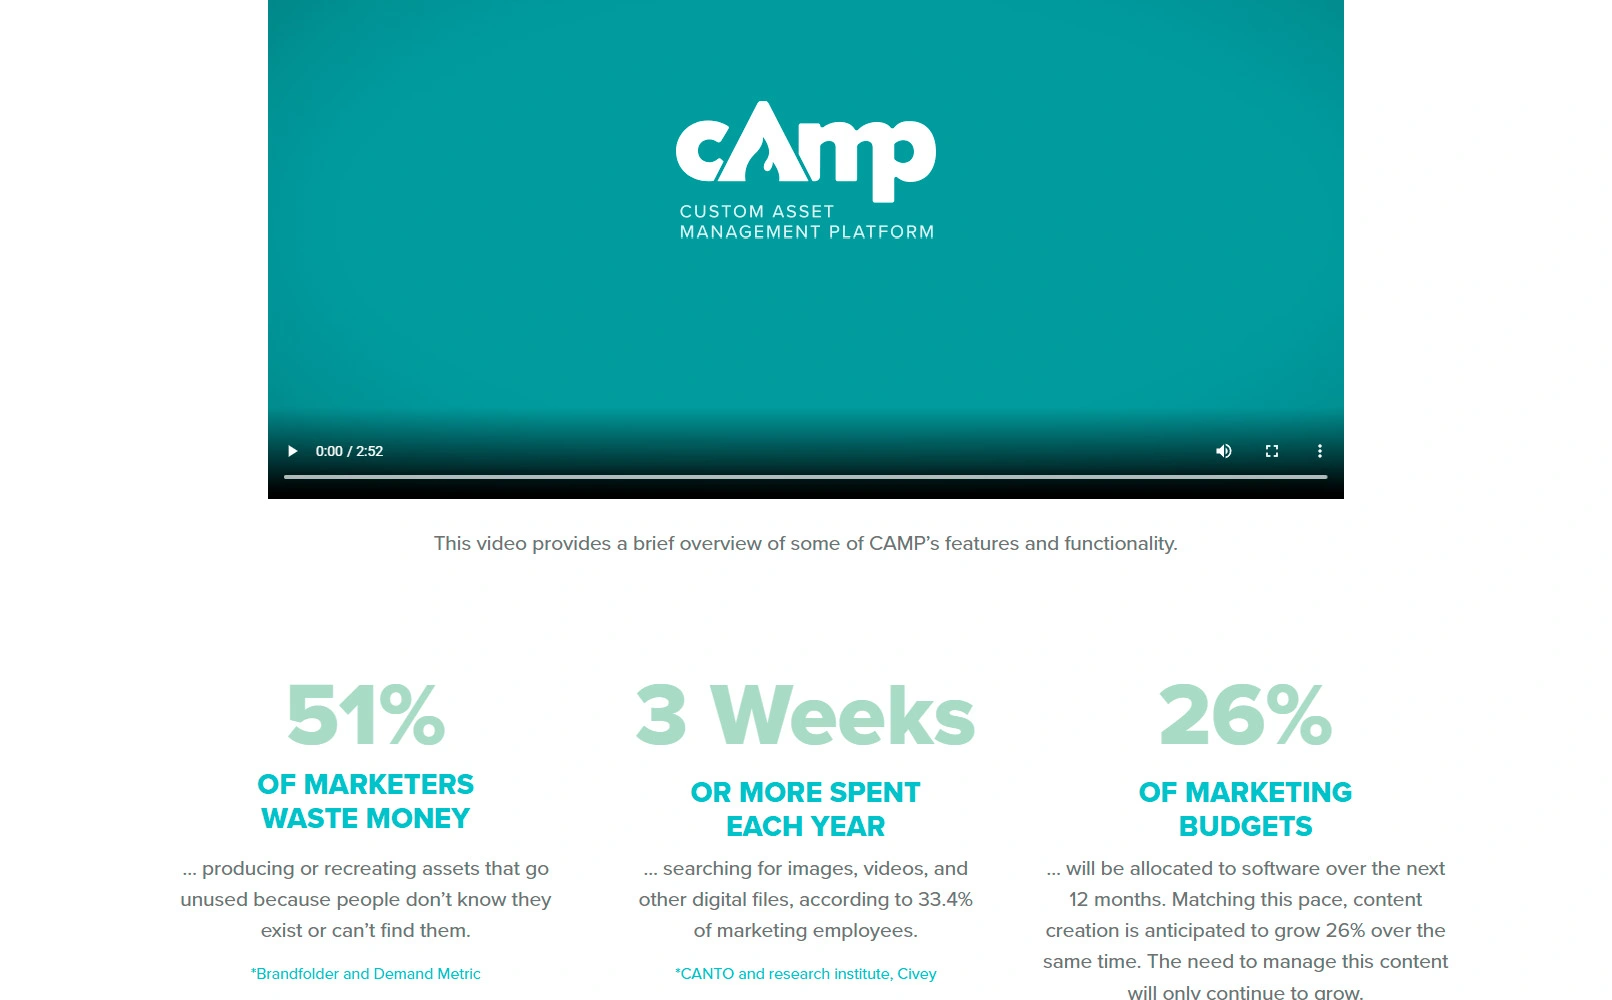 CAMP: Custom Asset Management Platform